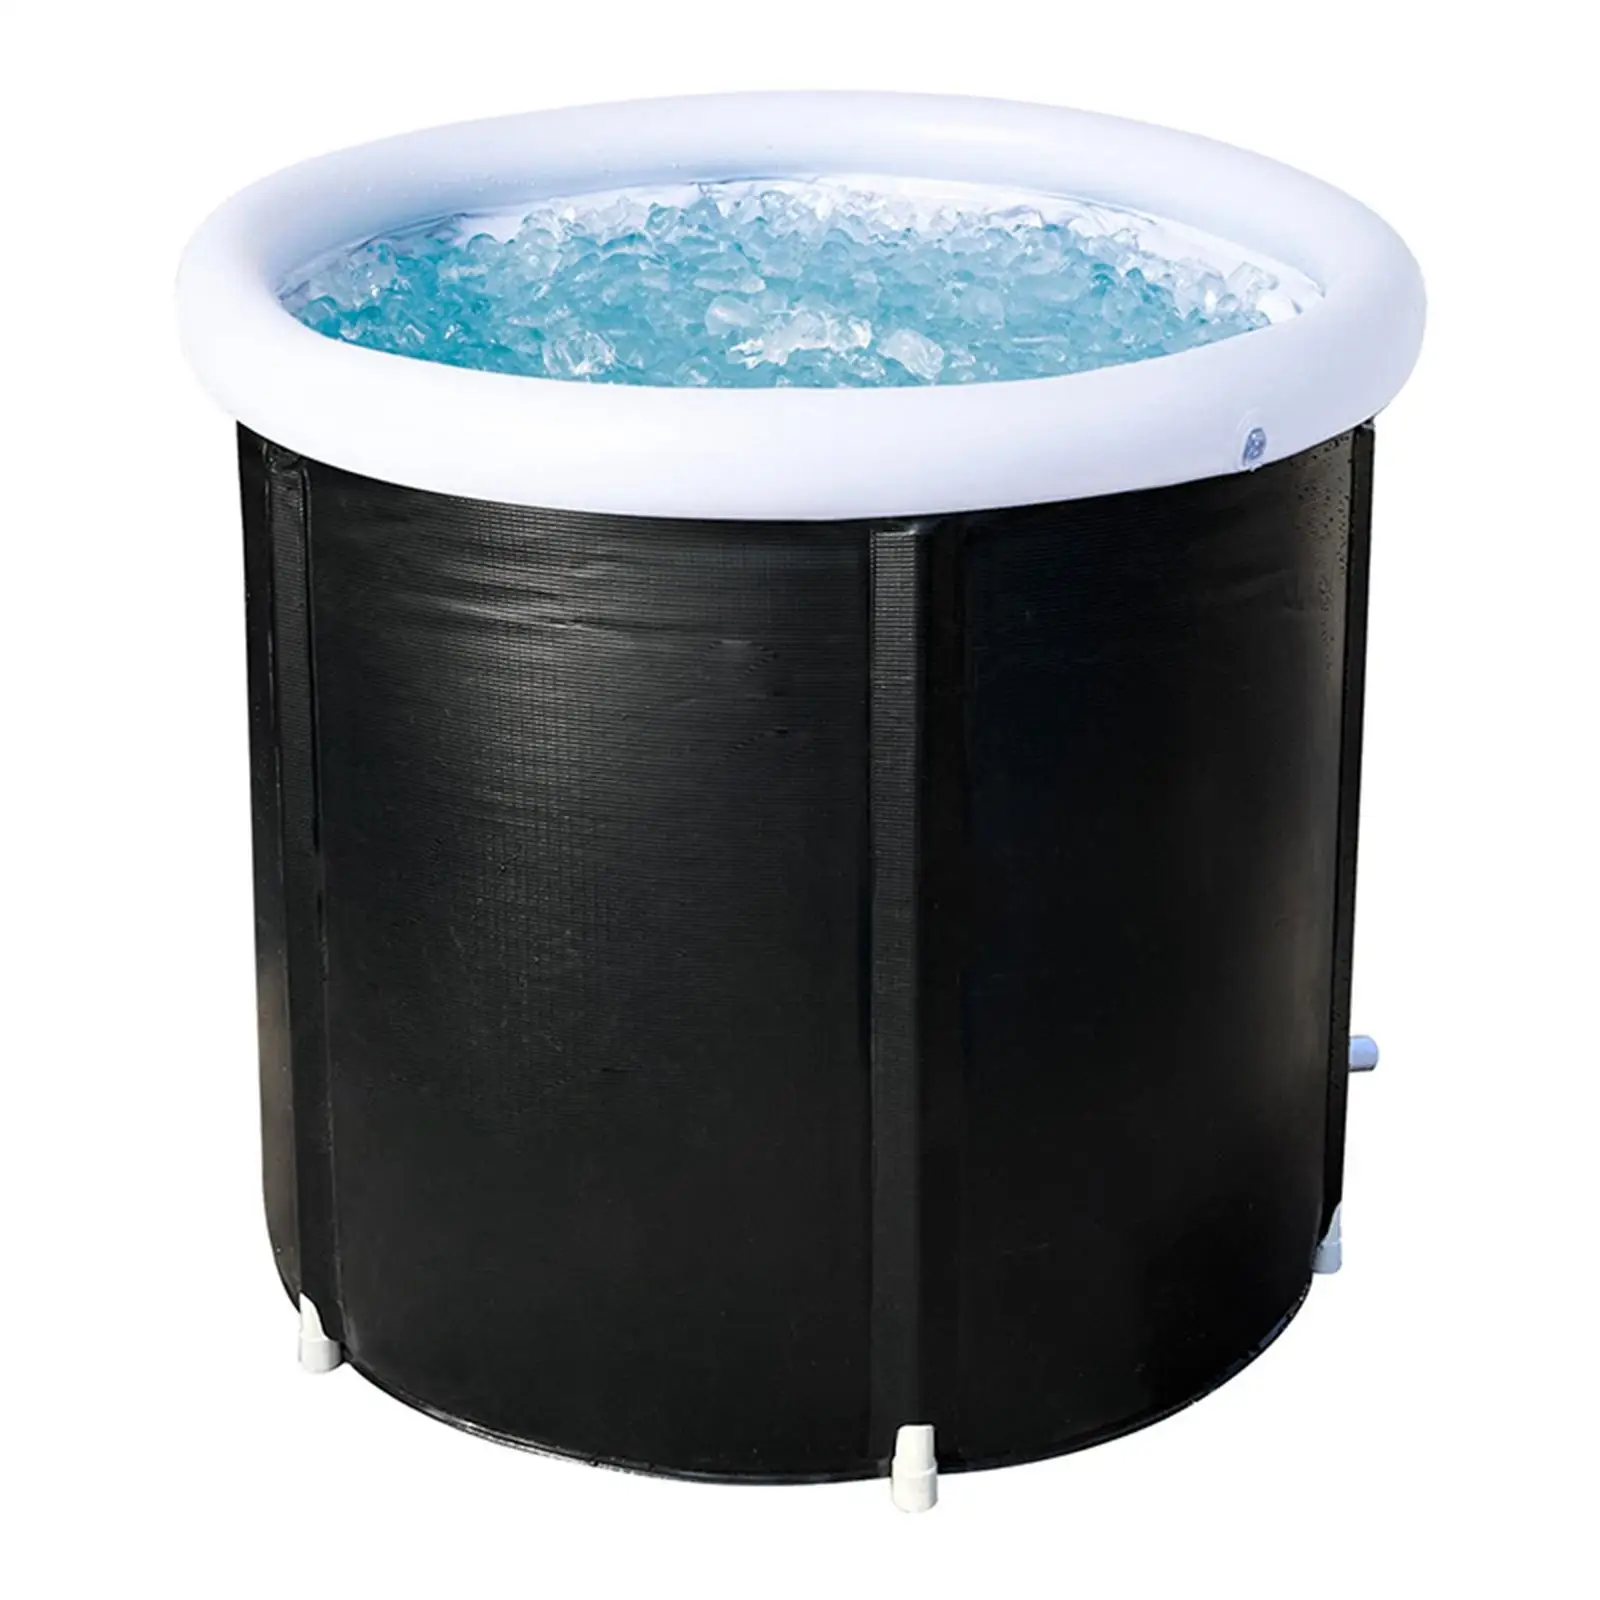 Portable Bathtub for Shower Stall Ice Bath Tub for Athletes Adults Kids